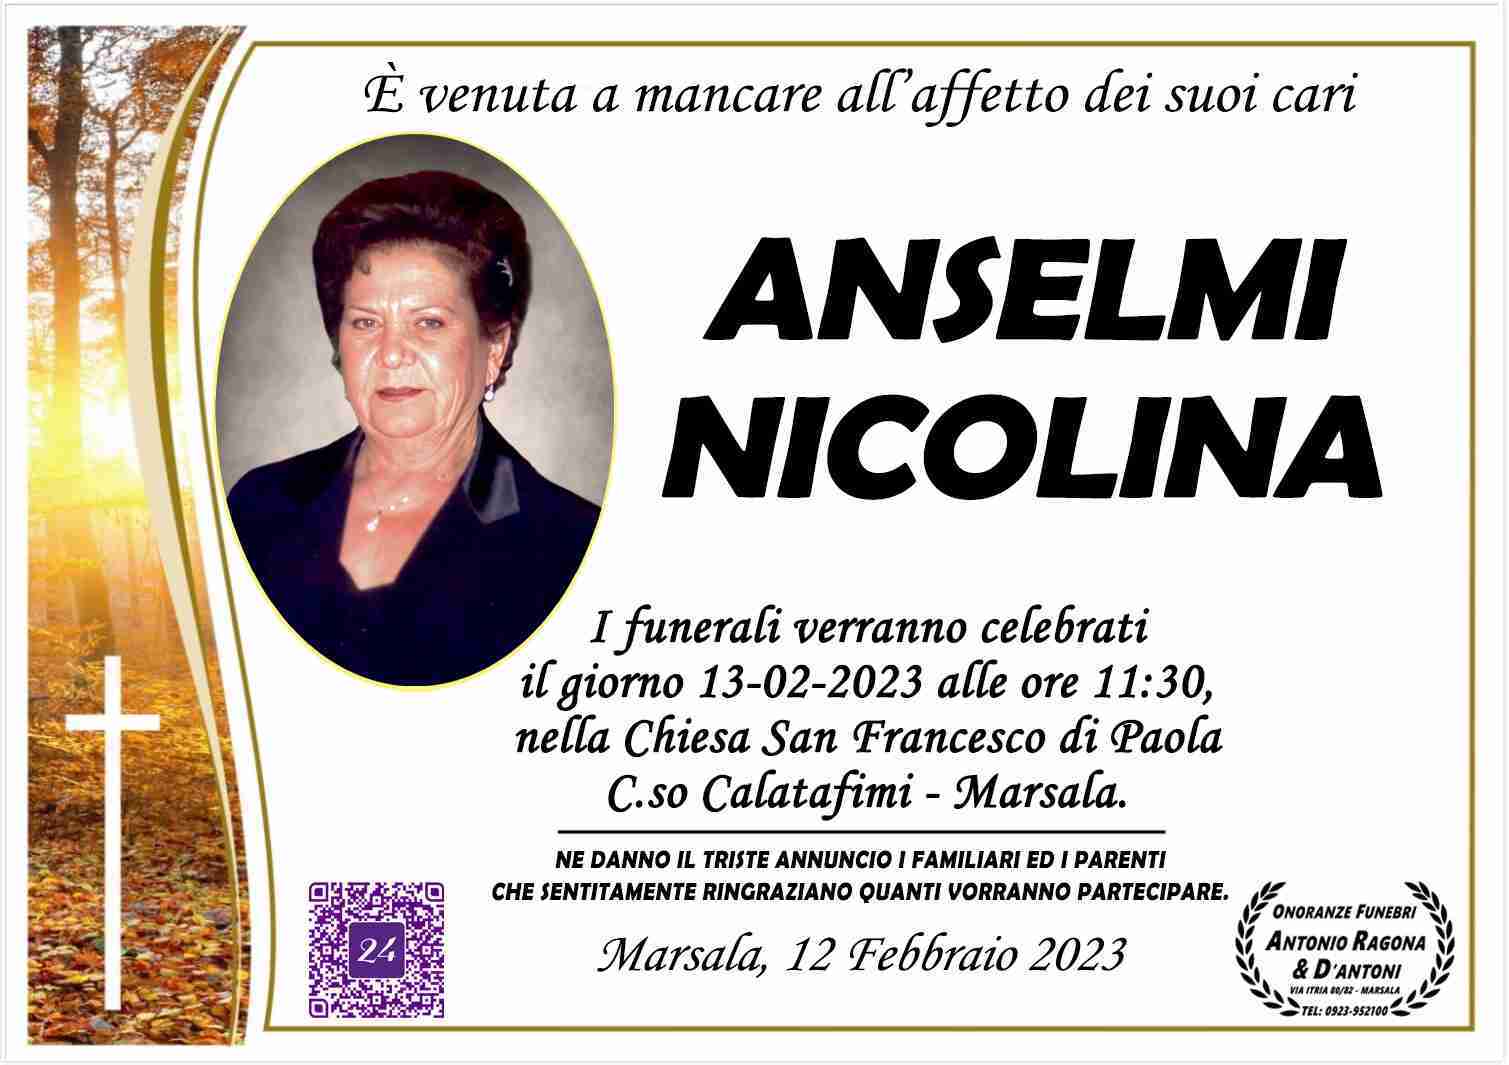 Nicolina Anselmi